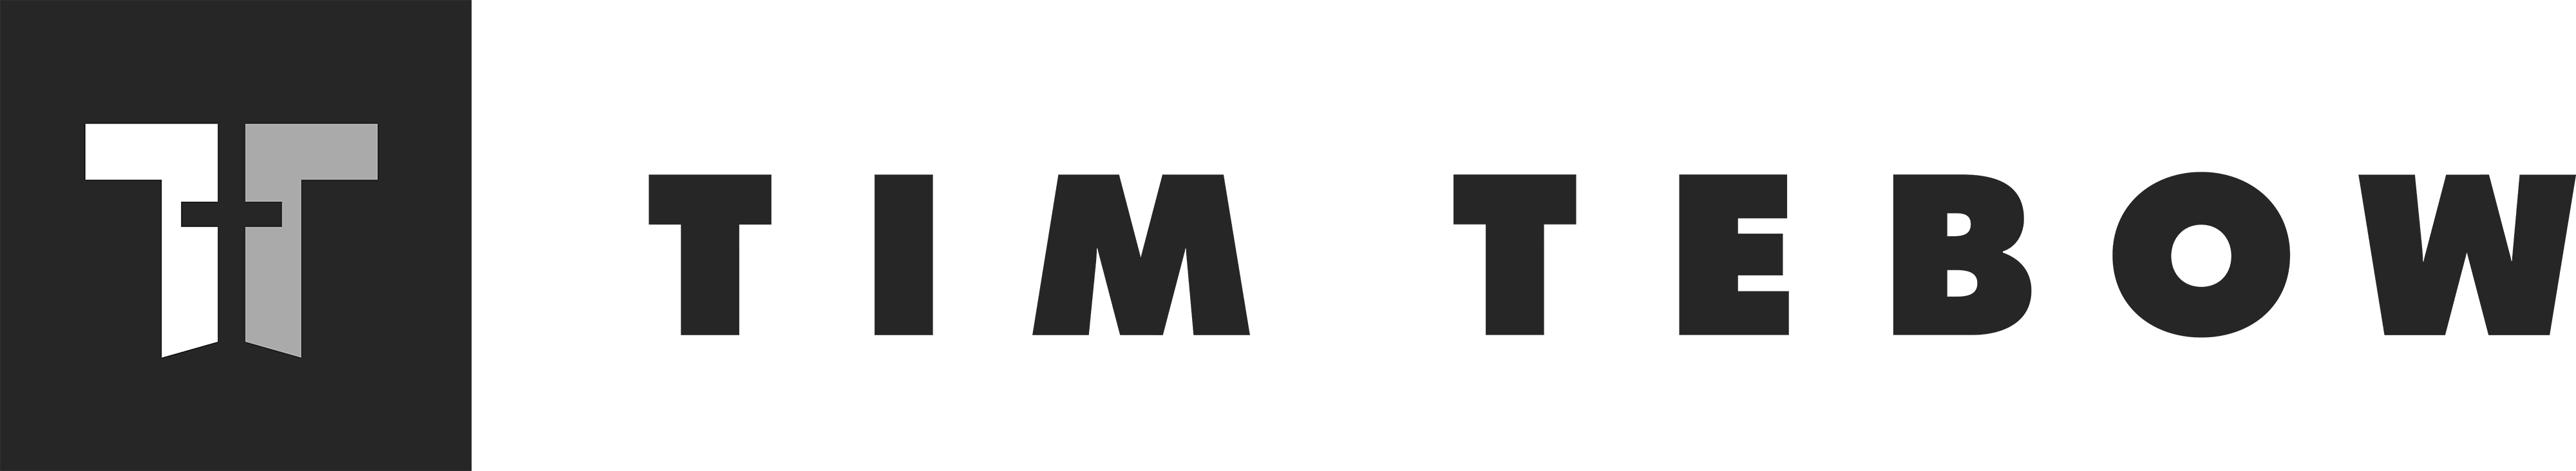 Tim Tebow logo